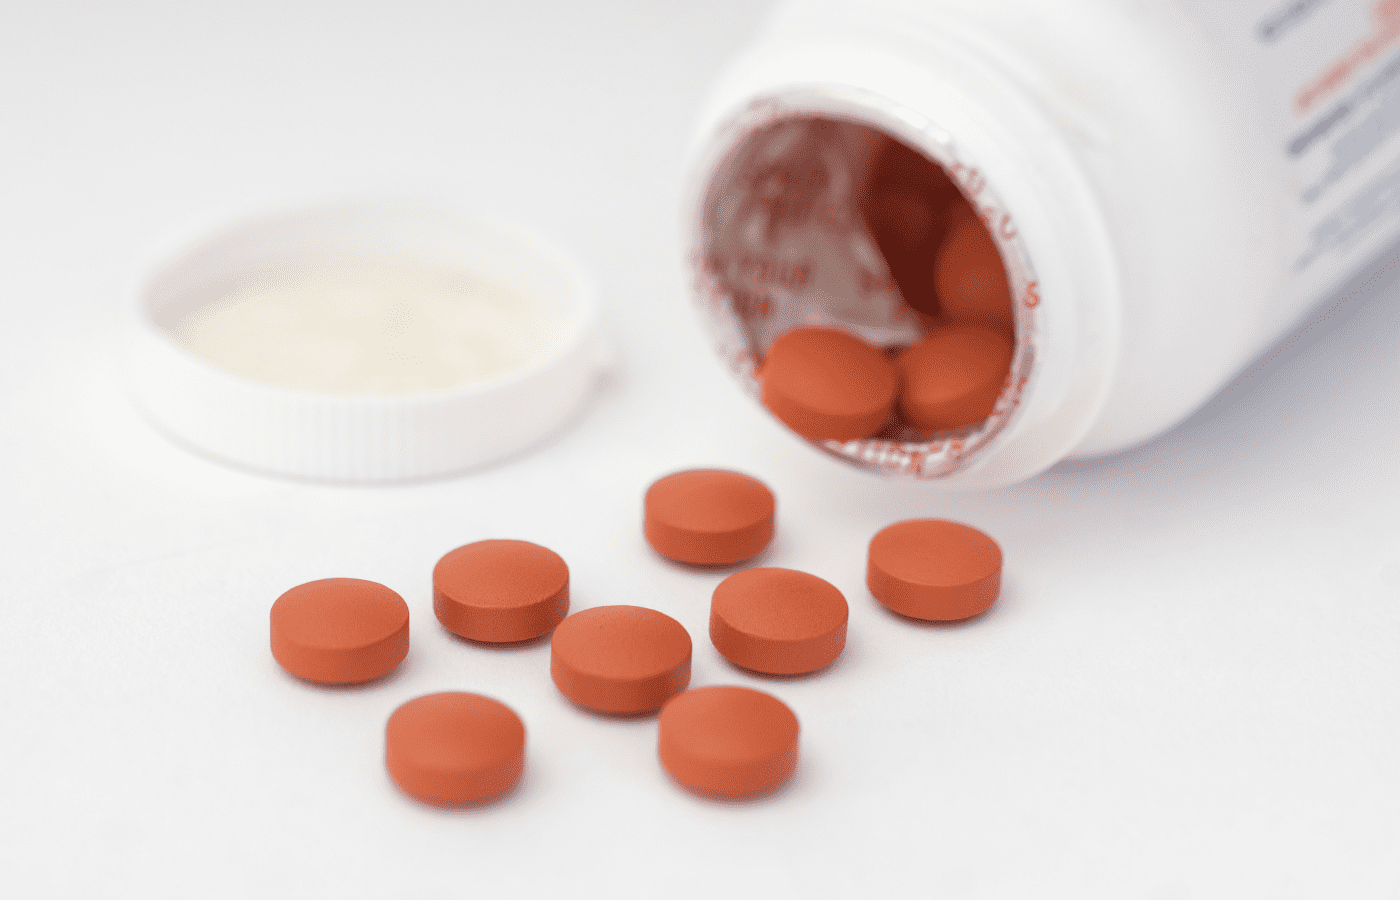 Does Trader Joe's Sell IbuprofenTylenol